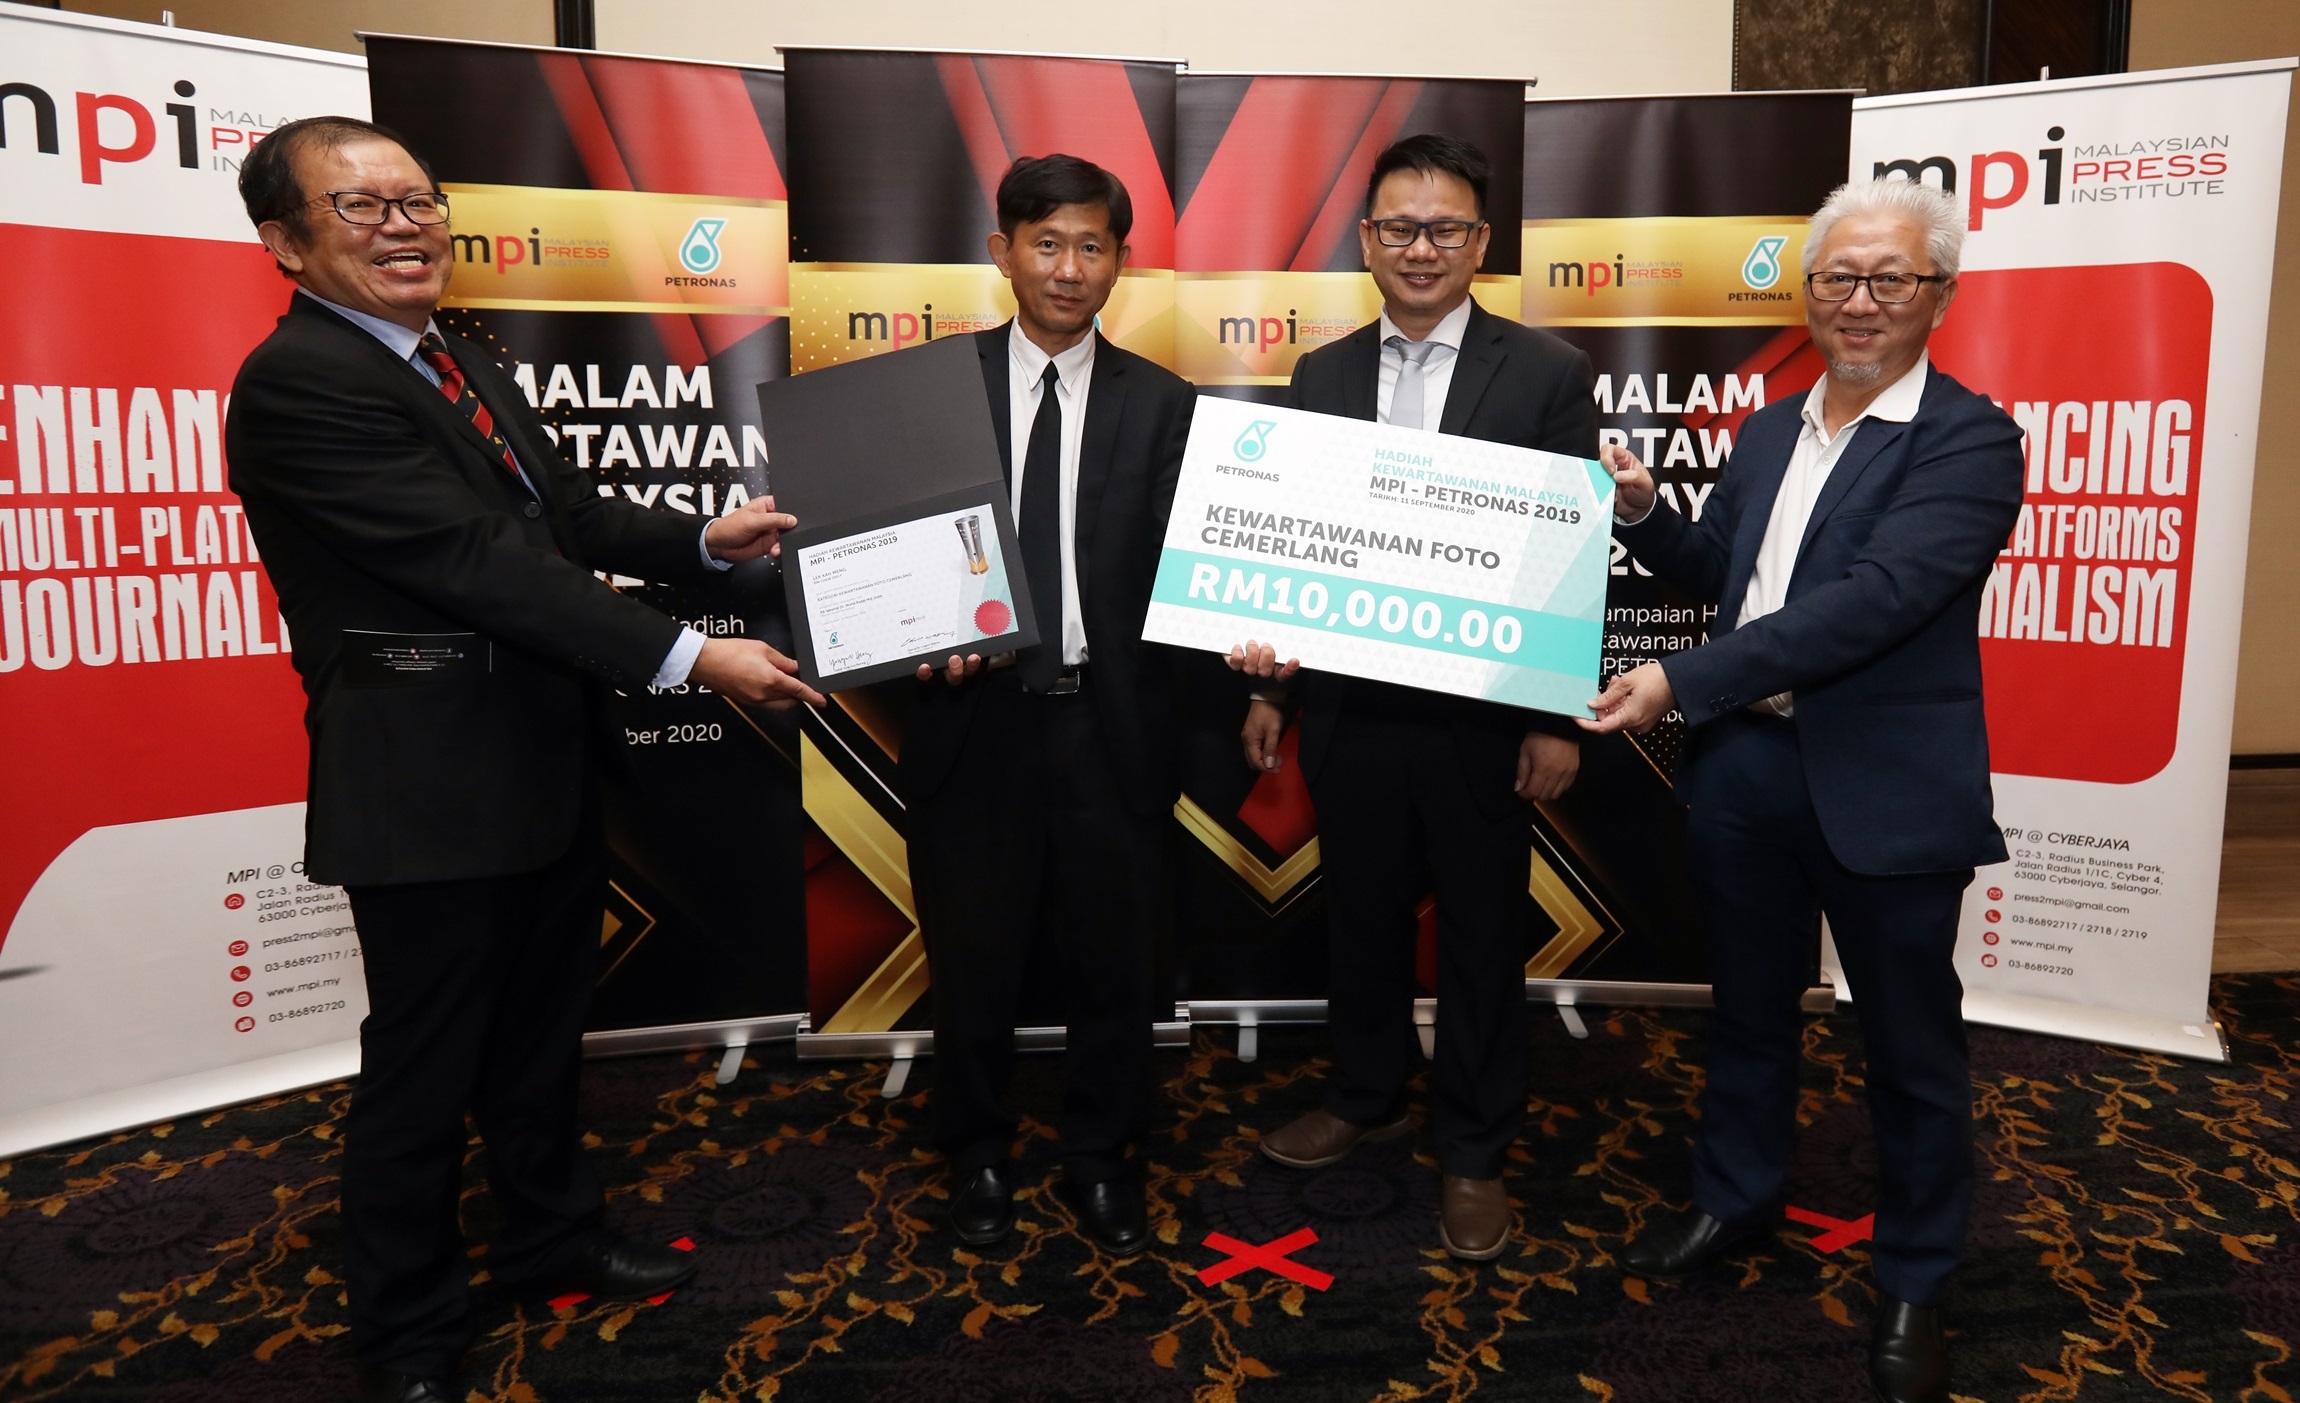 MPI Petronas JOURNALISM Awards 2019 -- Malaysian Press Institute (MPI) 1